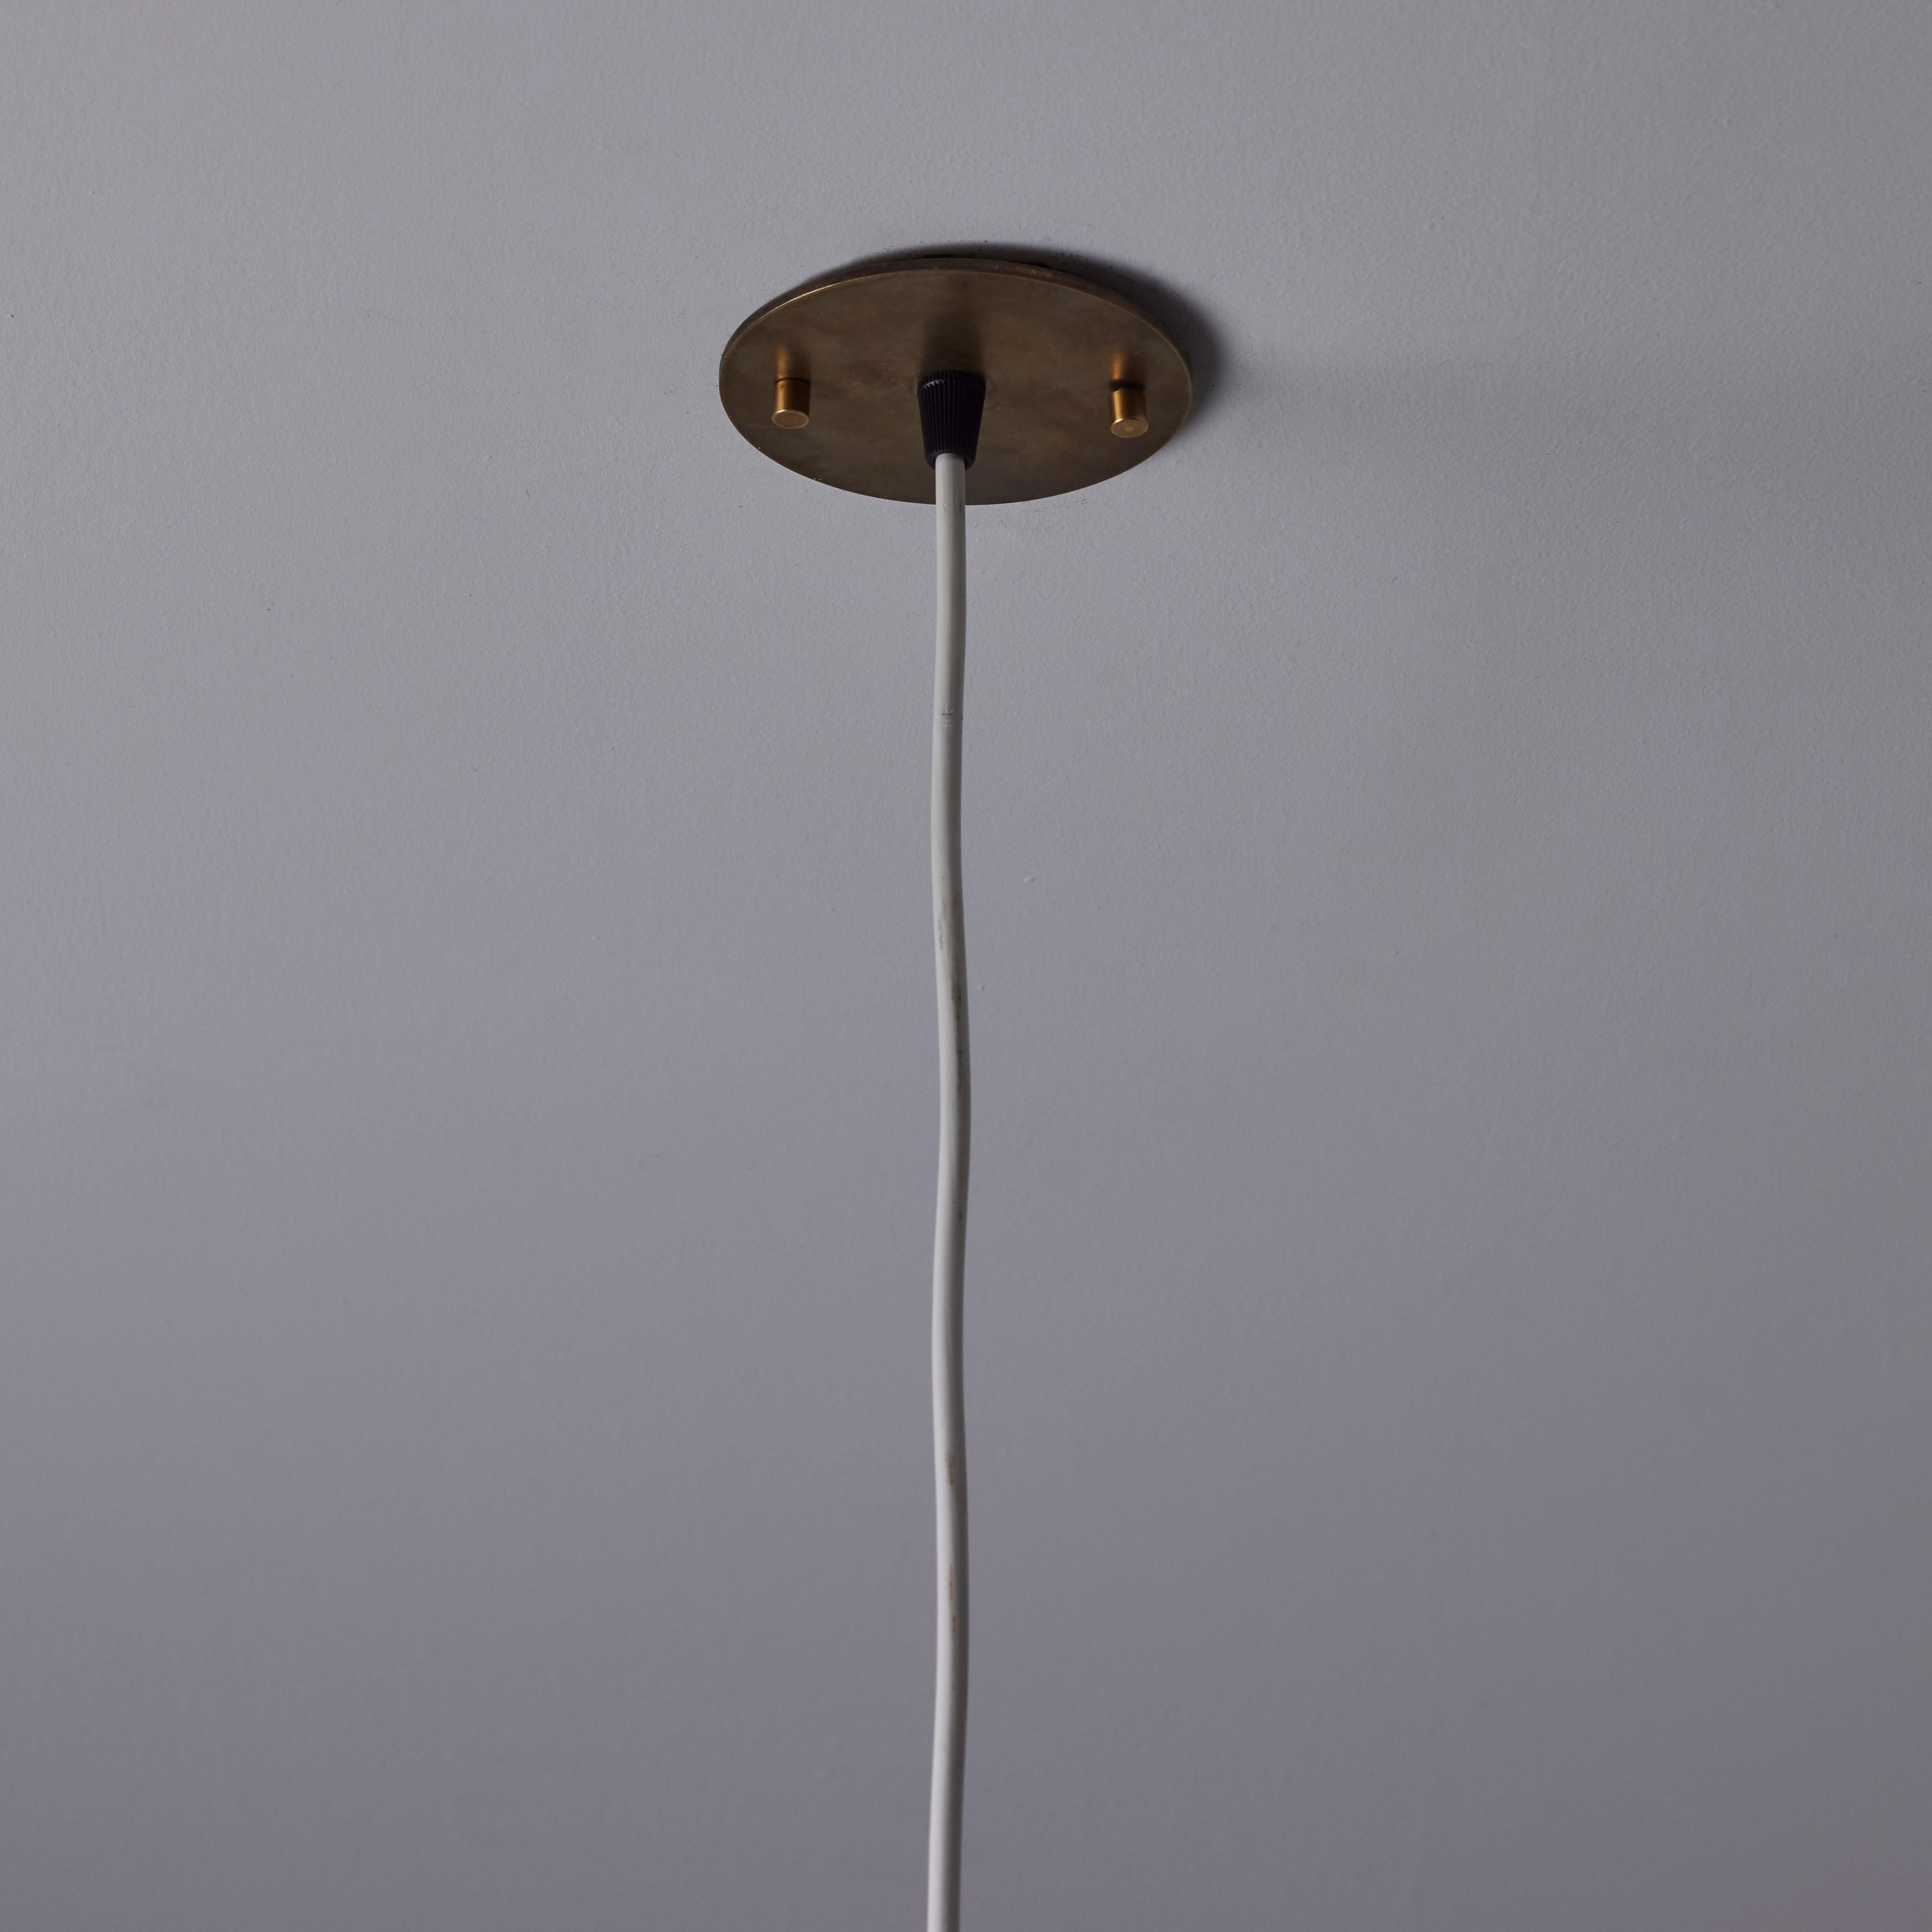 Suspension Ceiling Light by Stilnovo 5